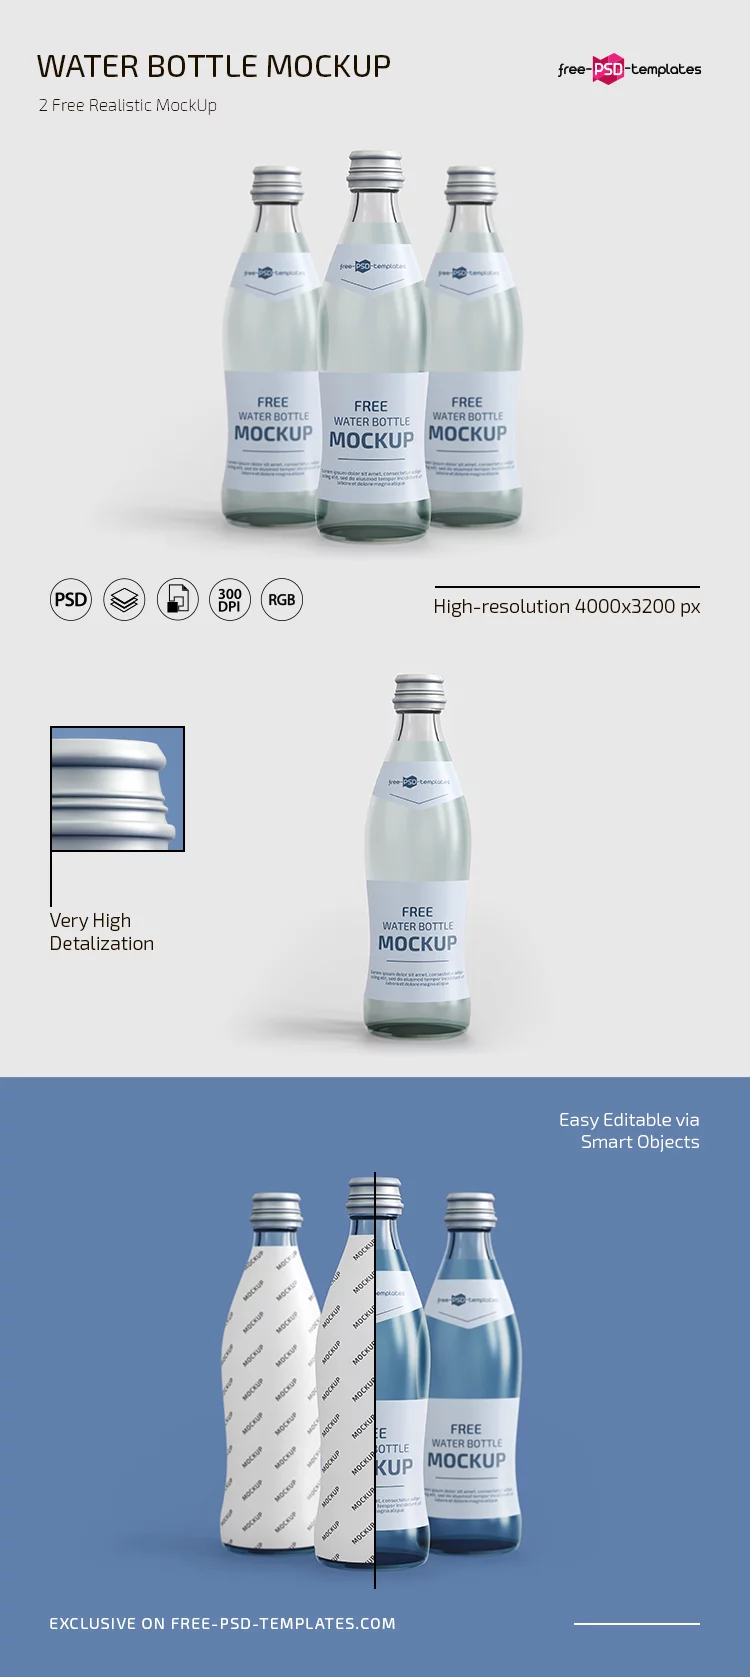 Free PSD Water Bottle Mockup Templates